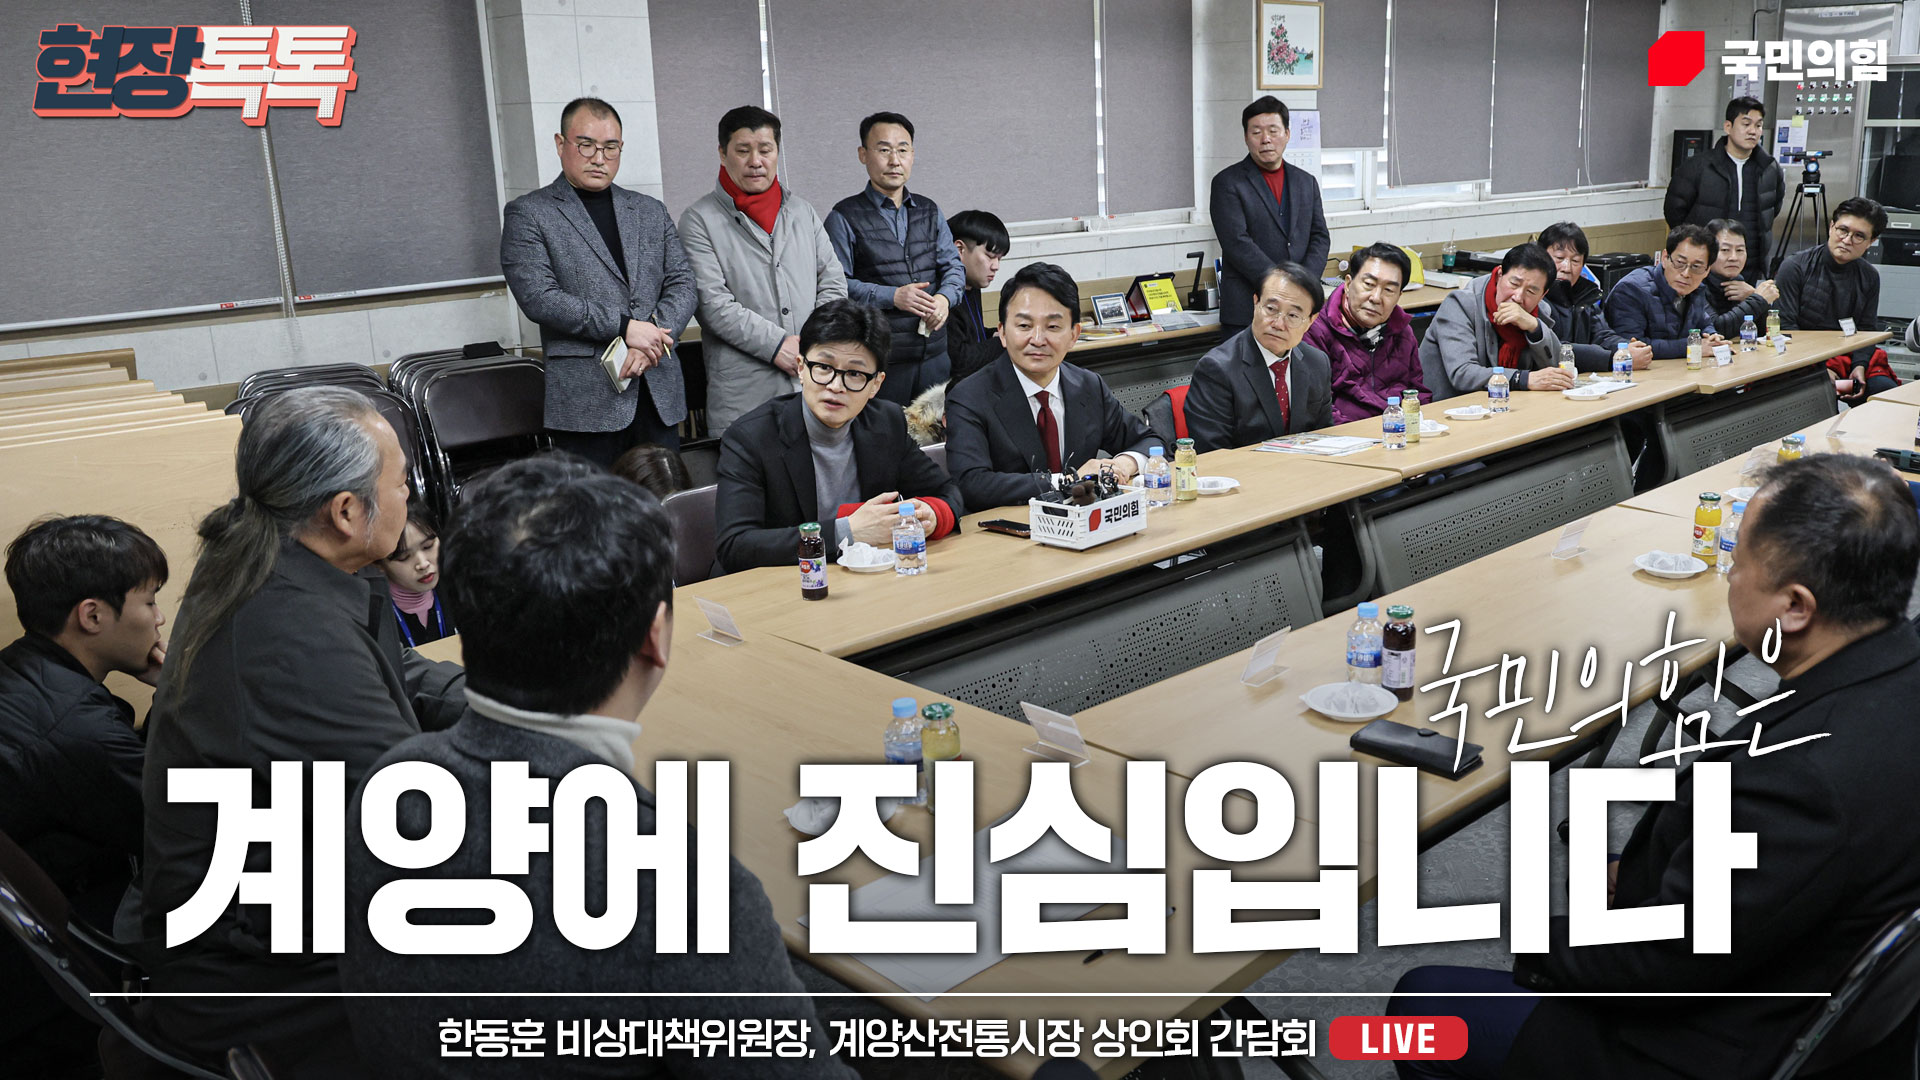 [Live] 2월 23일 계양산전통시장 상인회 간담회